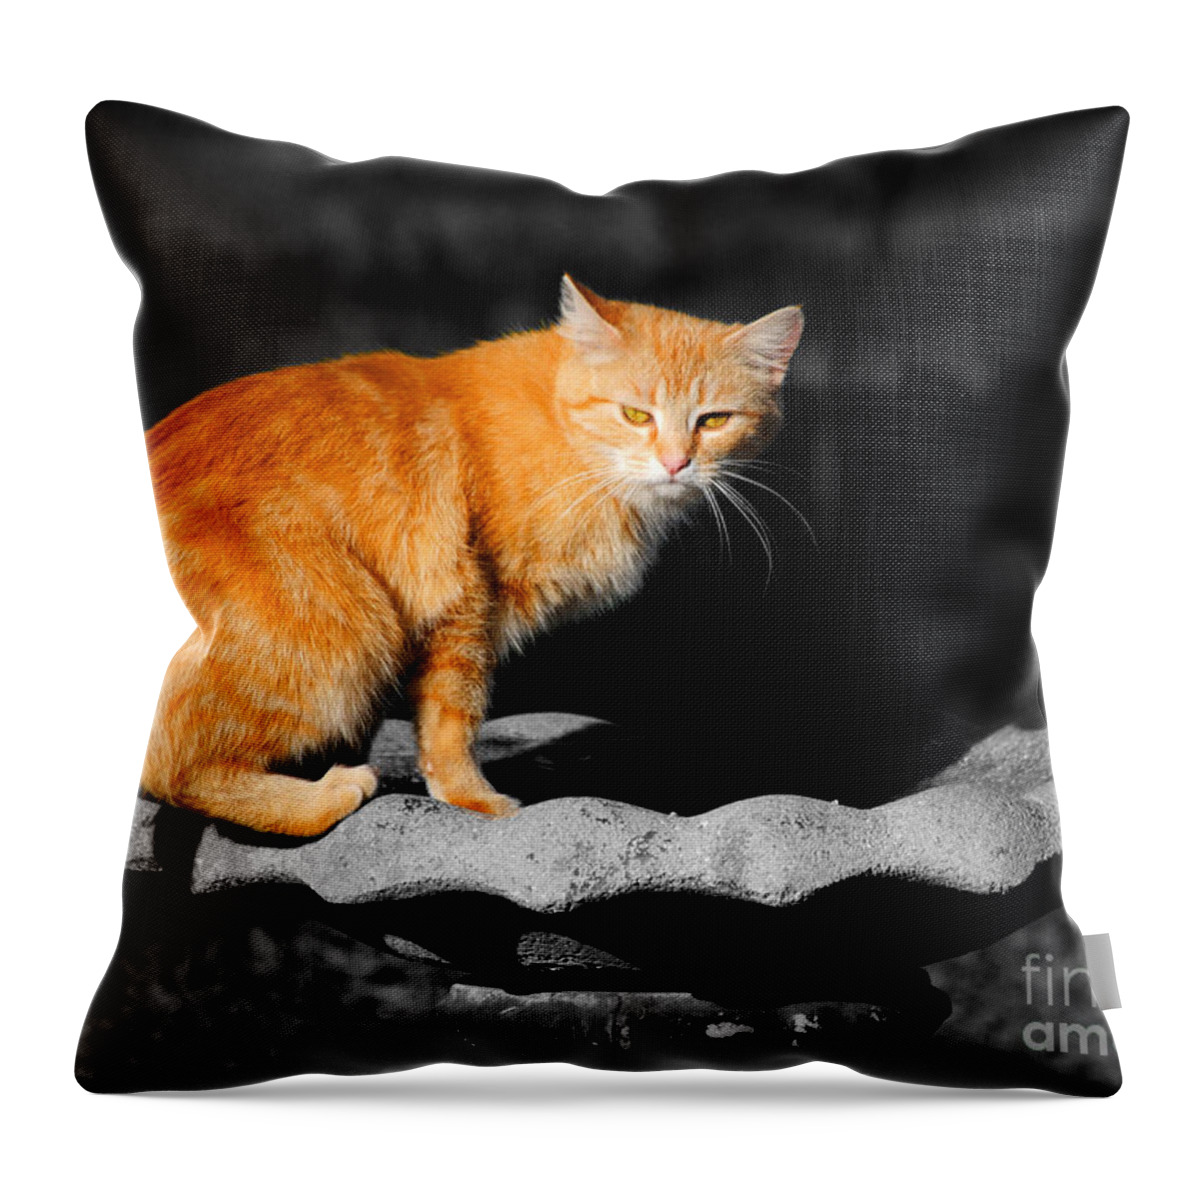 Orange Throw Pillow featuring the photograph Orange Cat by Jai Johnson